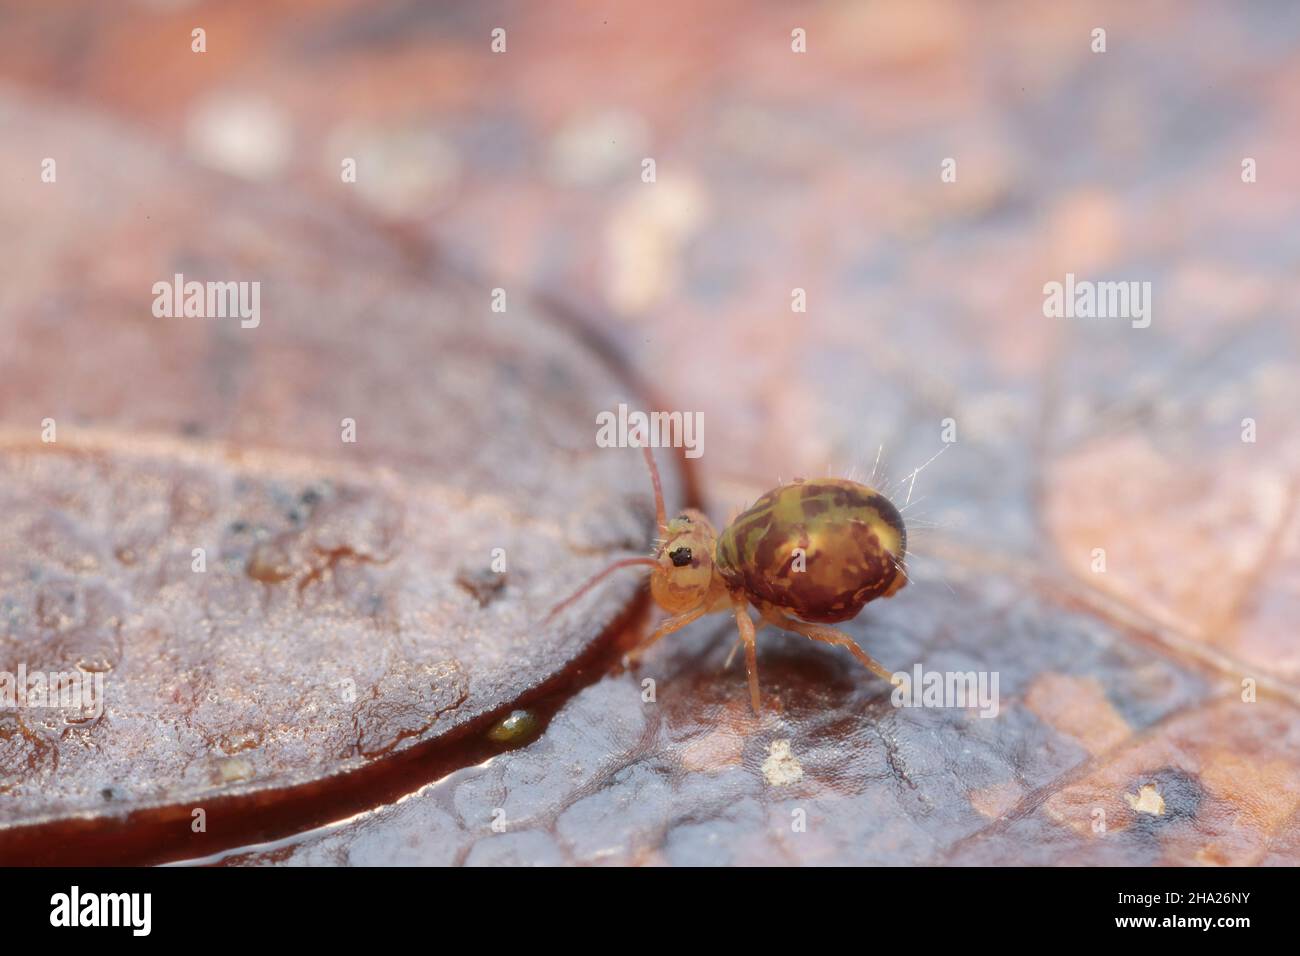 Globular springtail Dicyrtomina ornata or fusca in very close view Stock Photo